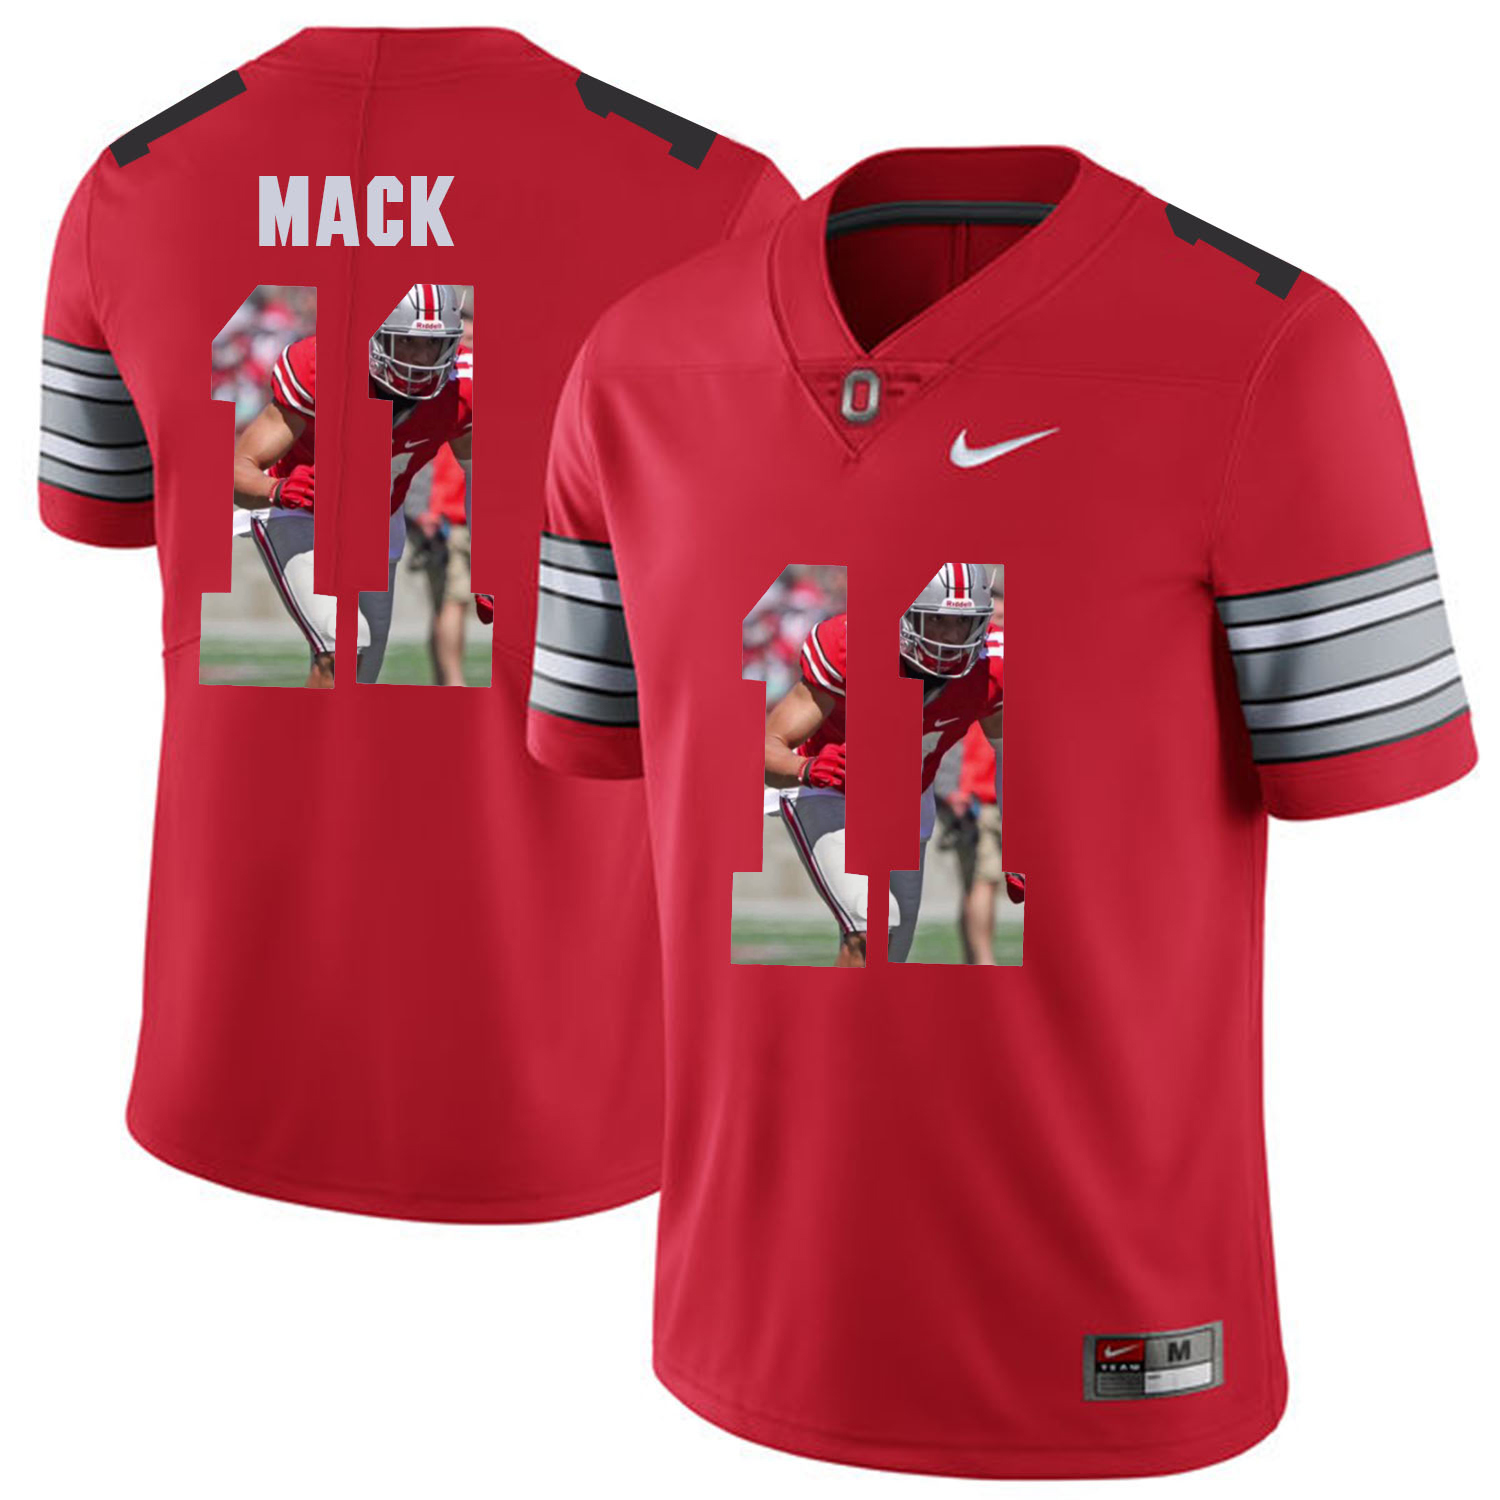 Men Ohio State 11 Mack Red Fashion Edition Customized NCAA Jerseys